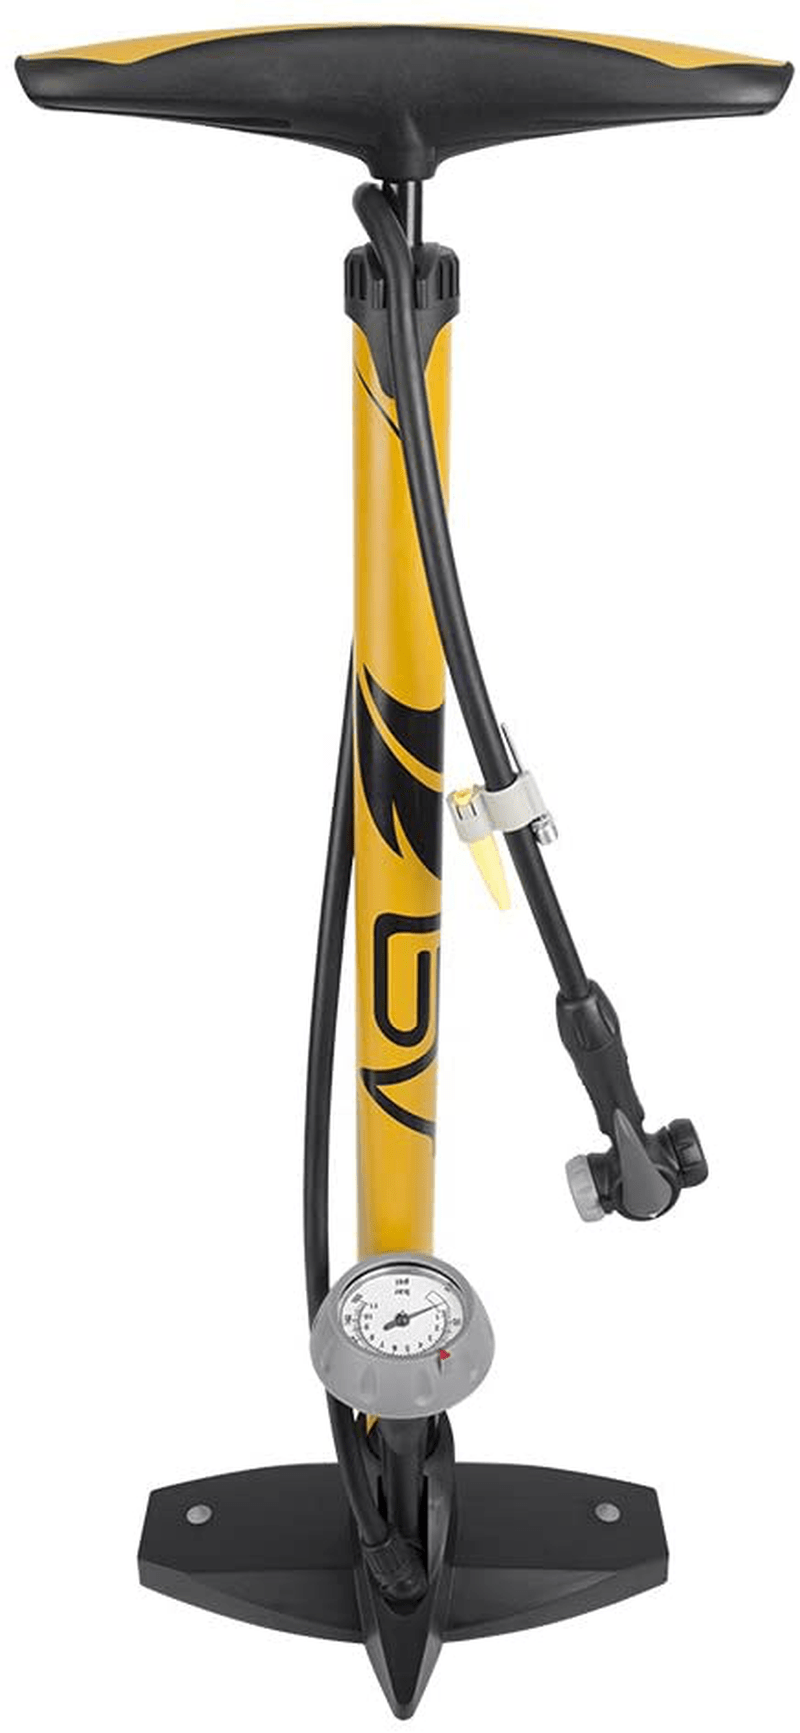 BV Bicycle Ergonomic Bike Floor Pump with Gauge & Smart Valve Head, 160 psi, Automatically Reversible Presta and Schrader